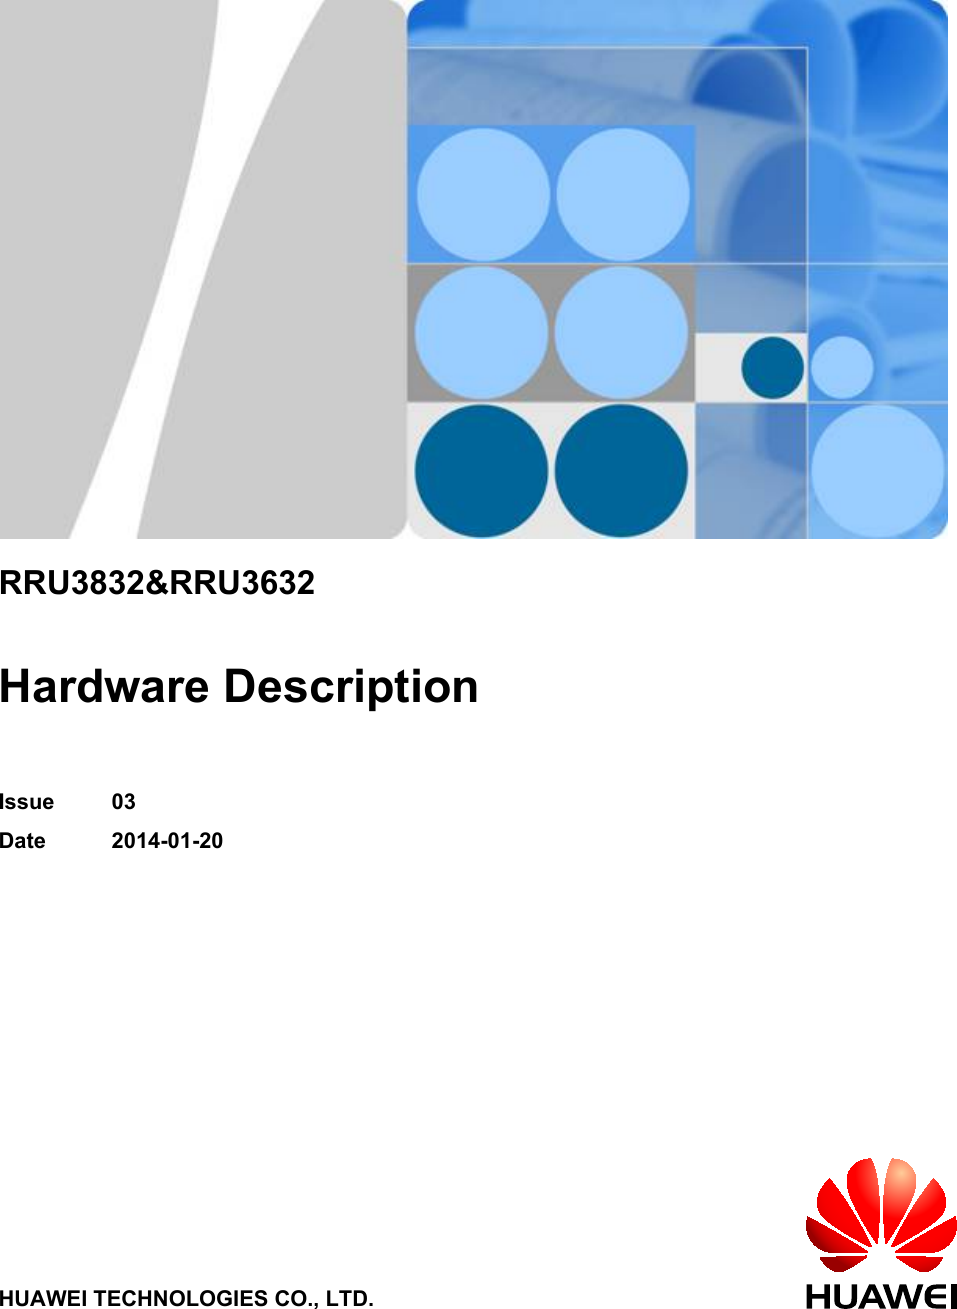 RRU3832&amp;RRU3632Hardware DescriptionIssue 03Date 2014-01-20HUAWEI TECHNOLOGIES CO., LTD.